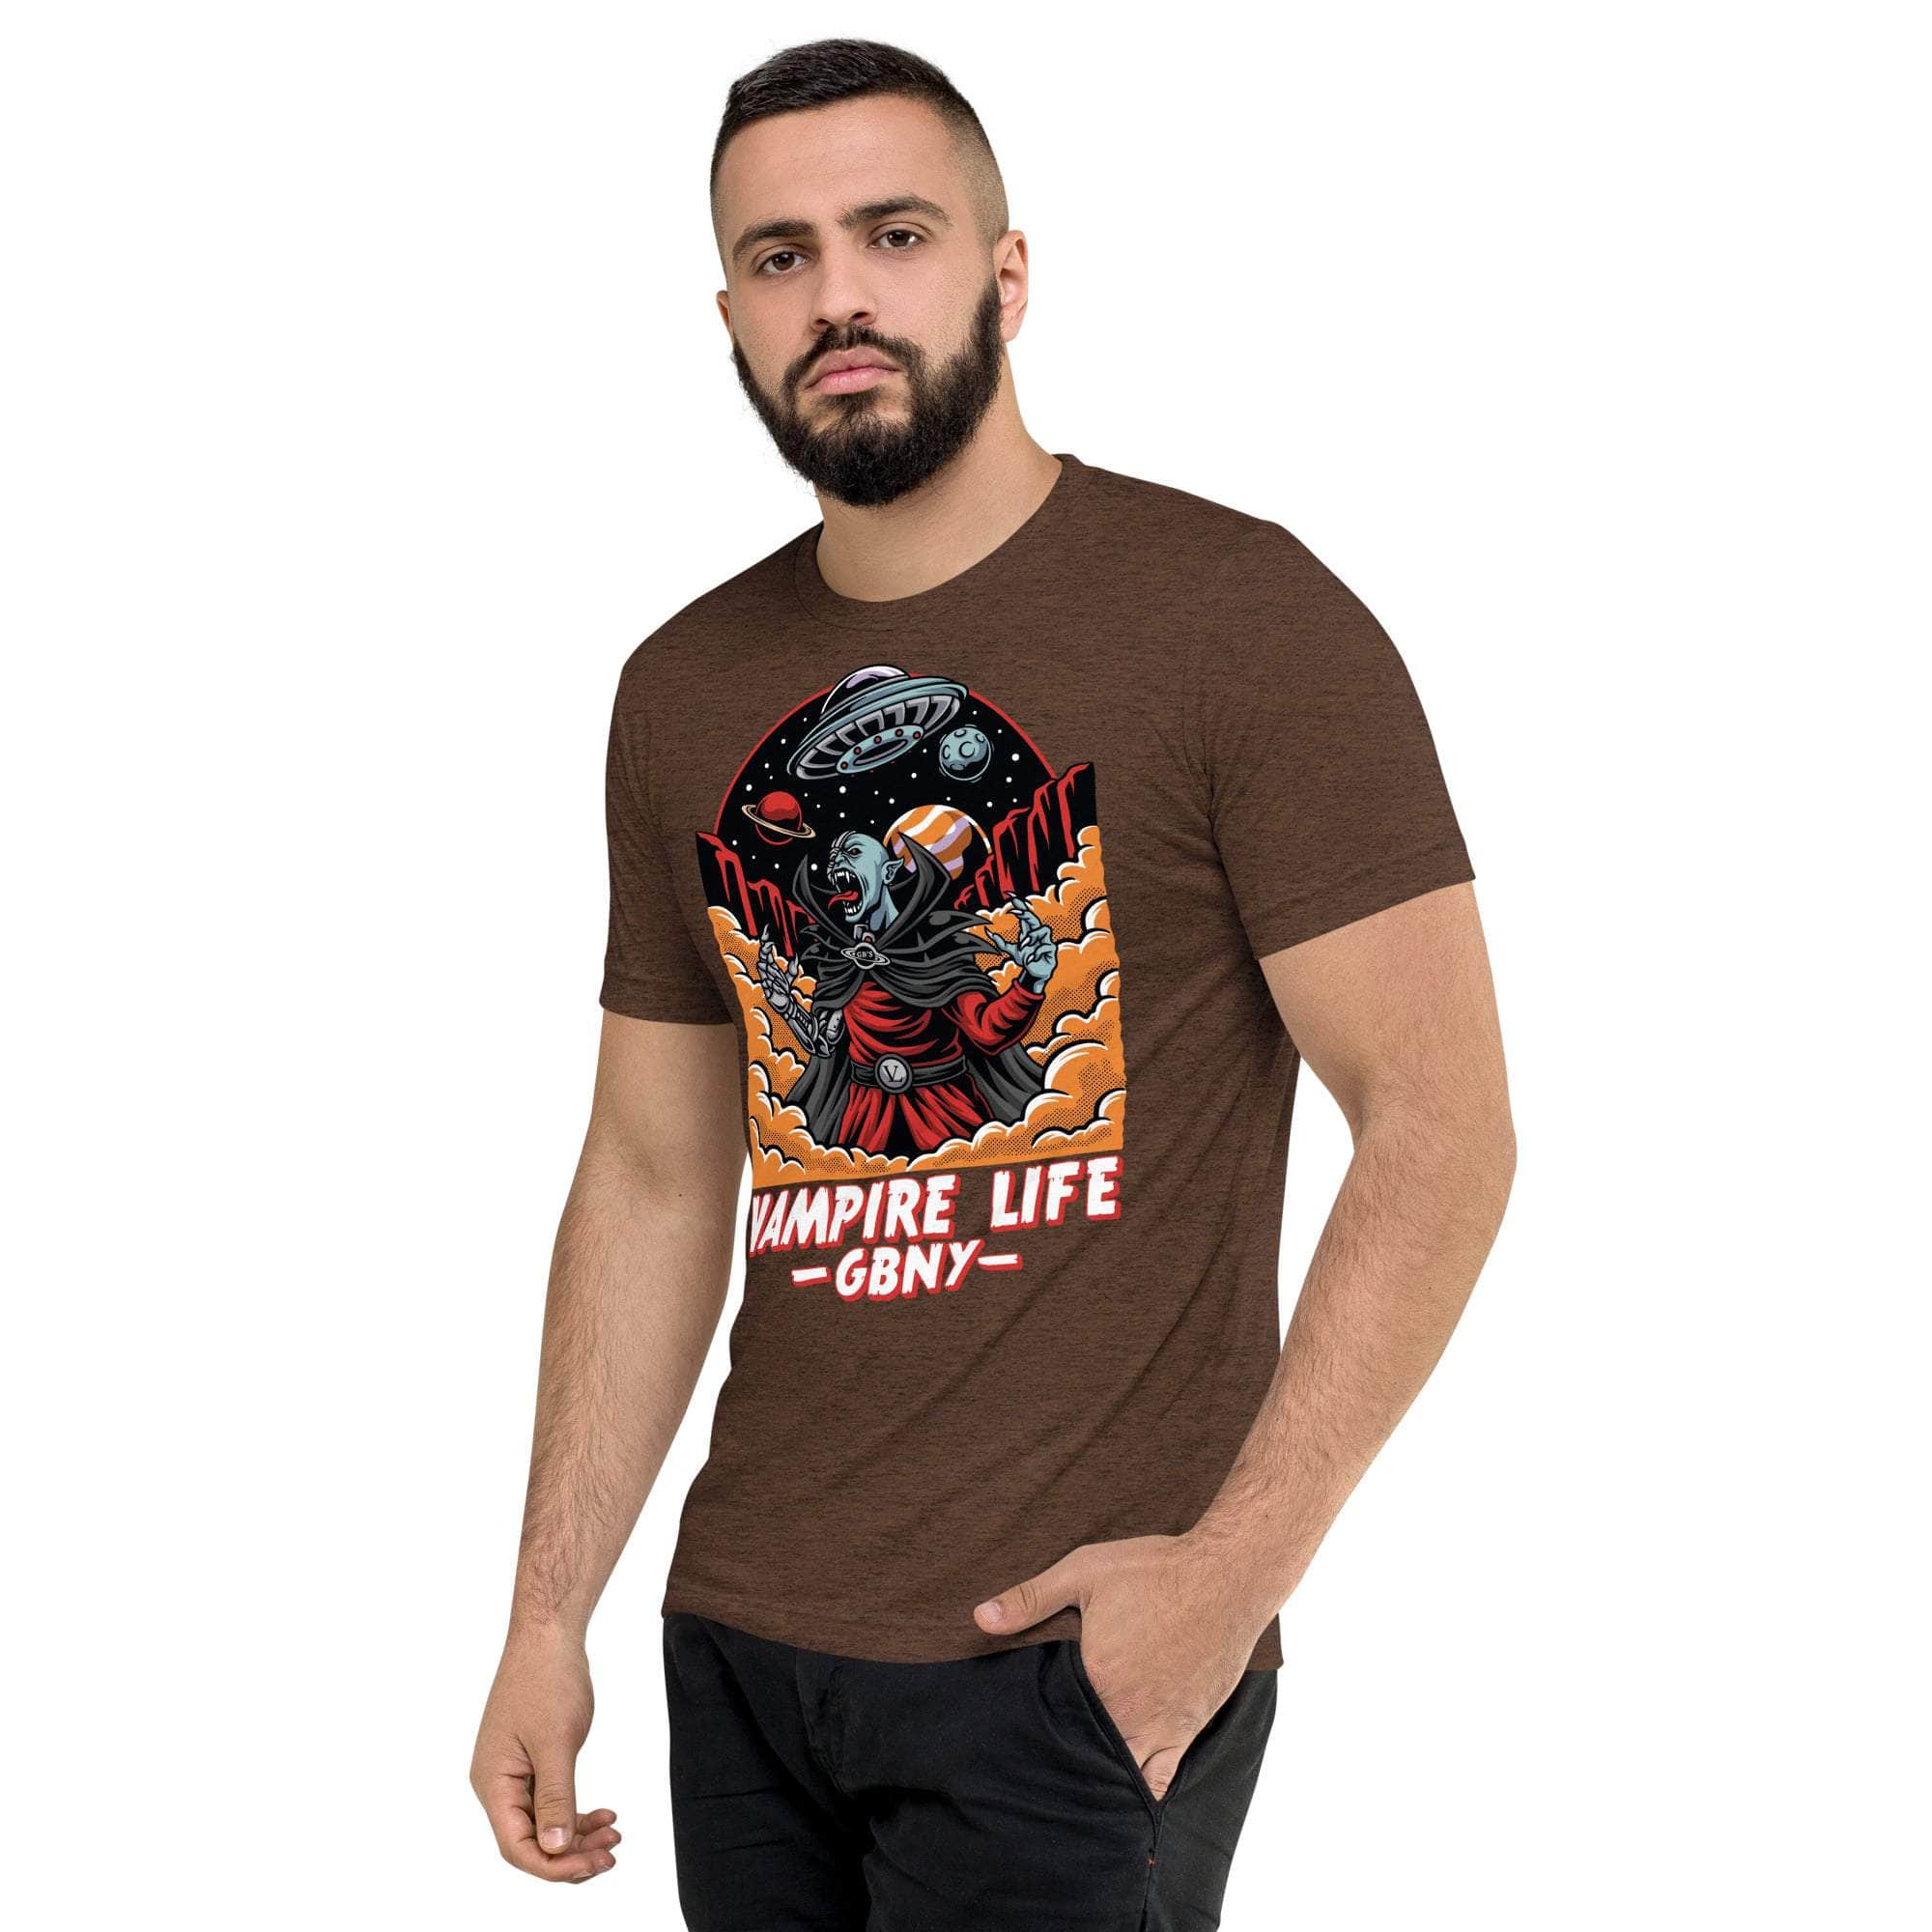 GBNY Vamp Life X GBNY "Space Vampire" T-shirt - Men's